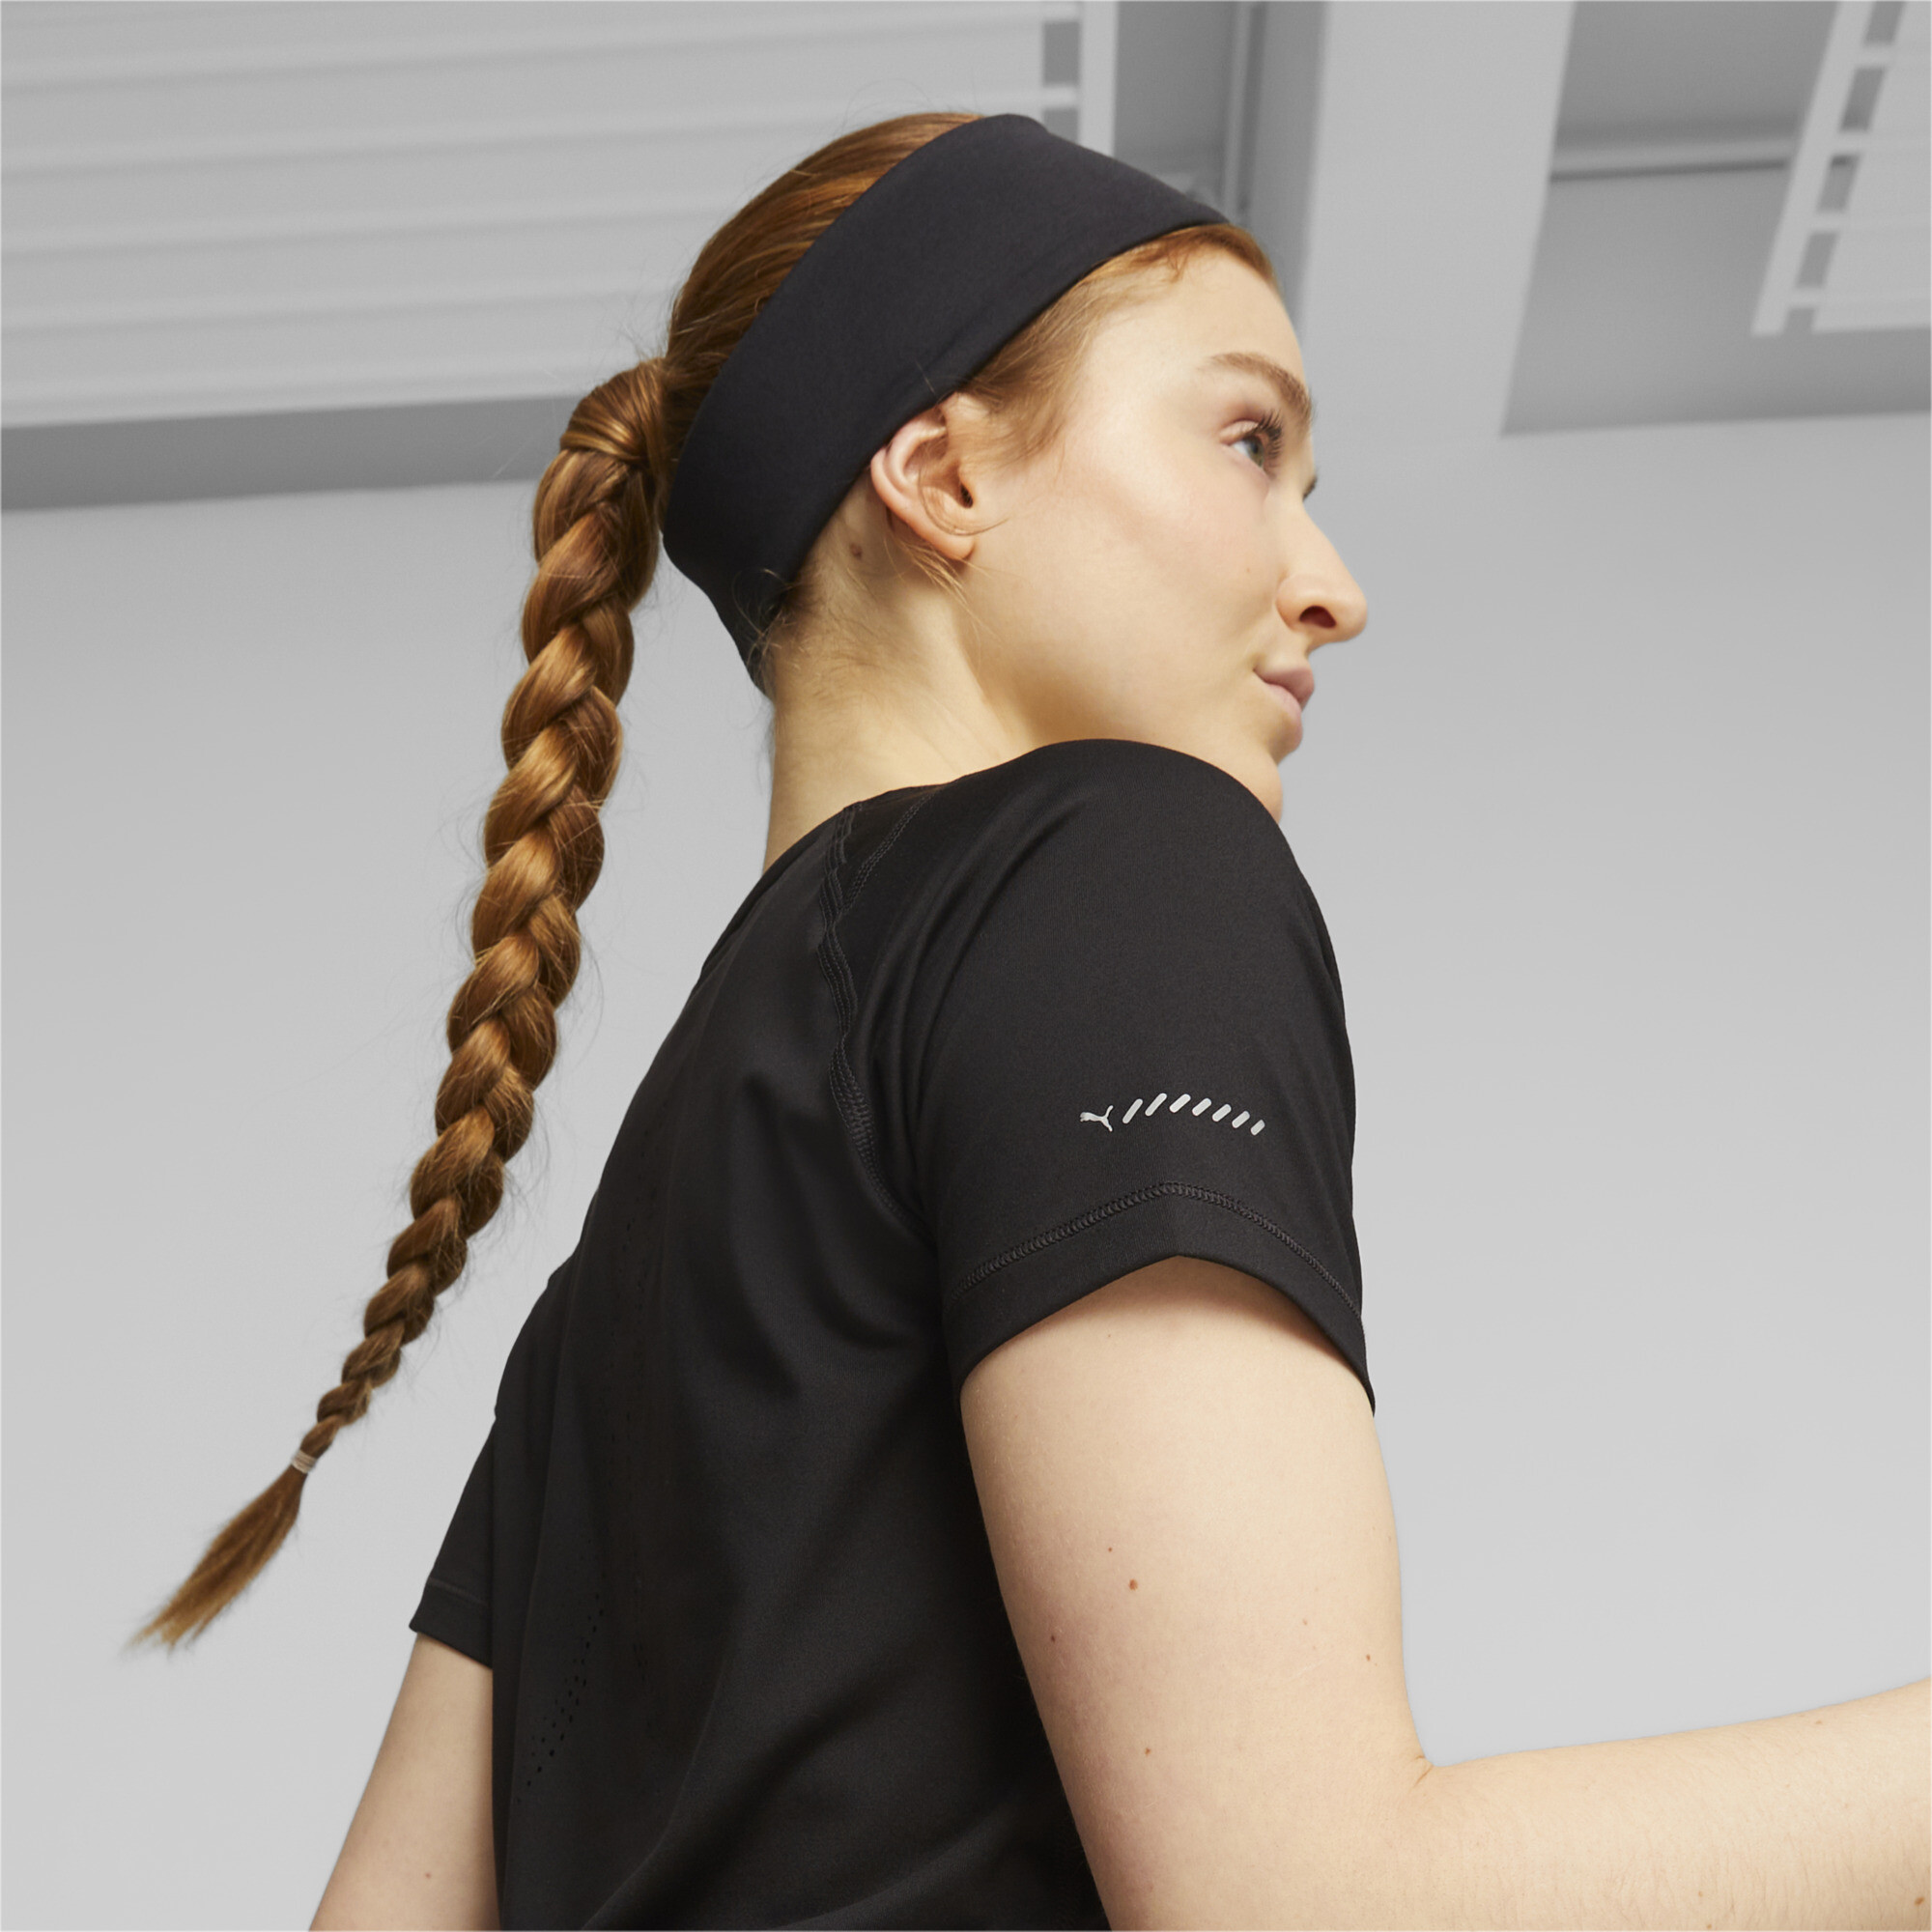 Puma Training Headband, Black, Size Adult, Sport